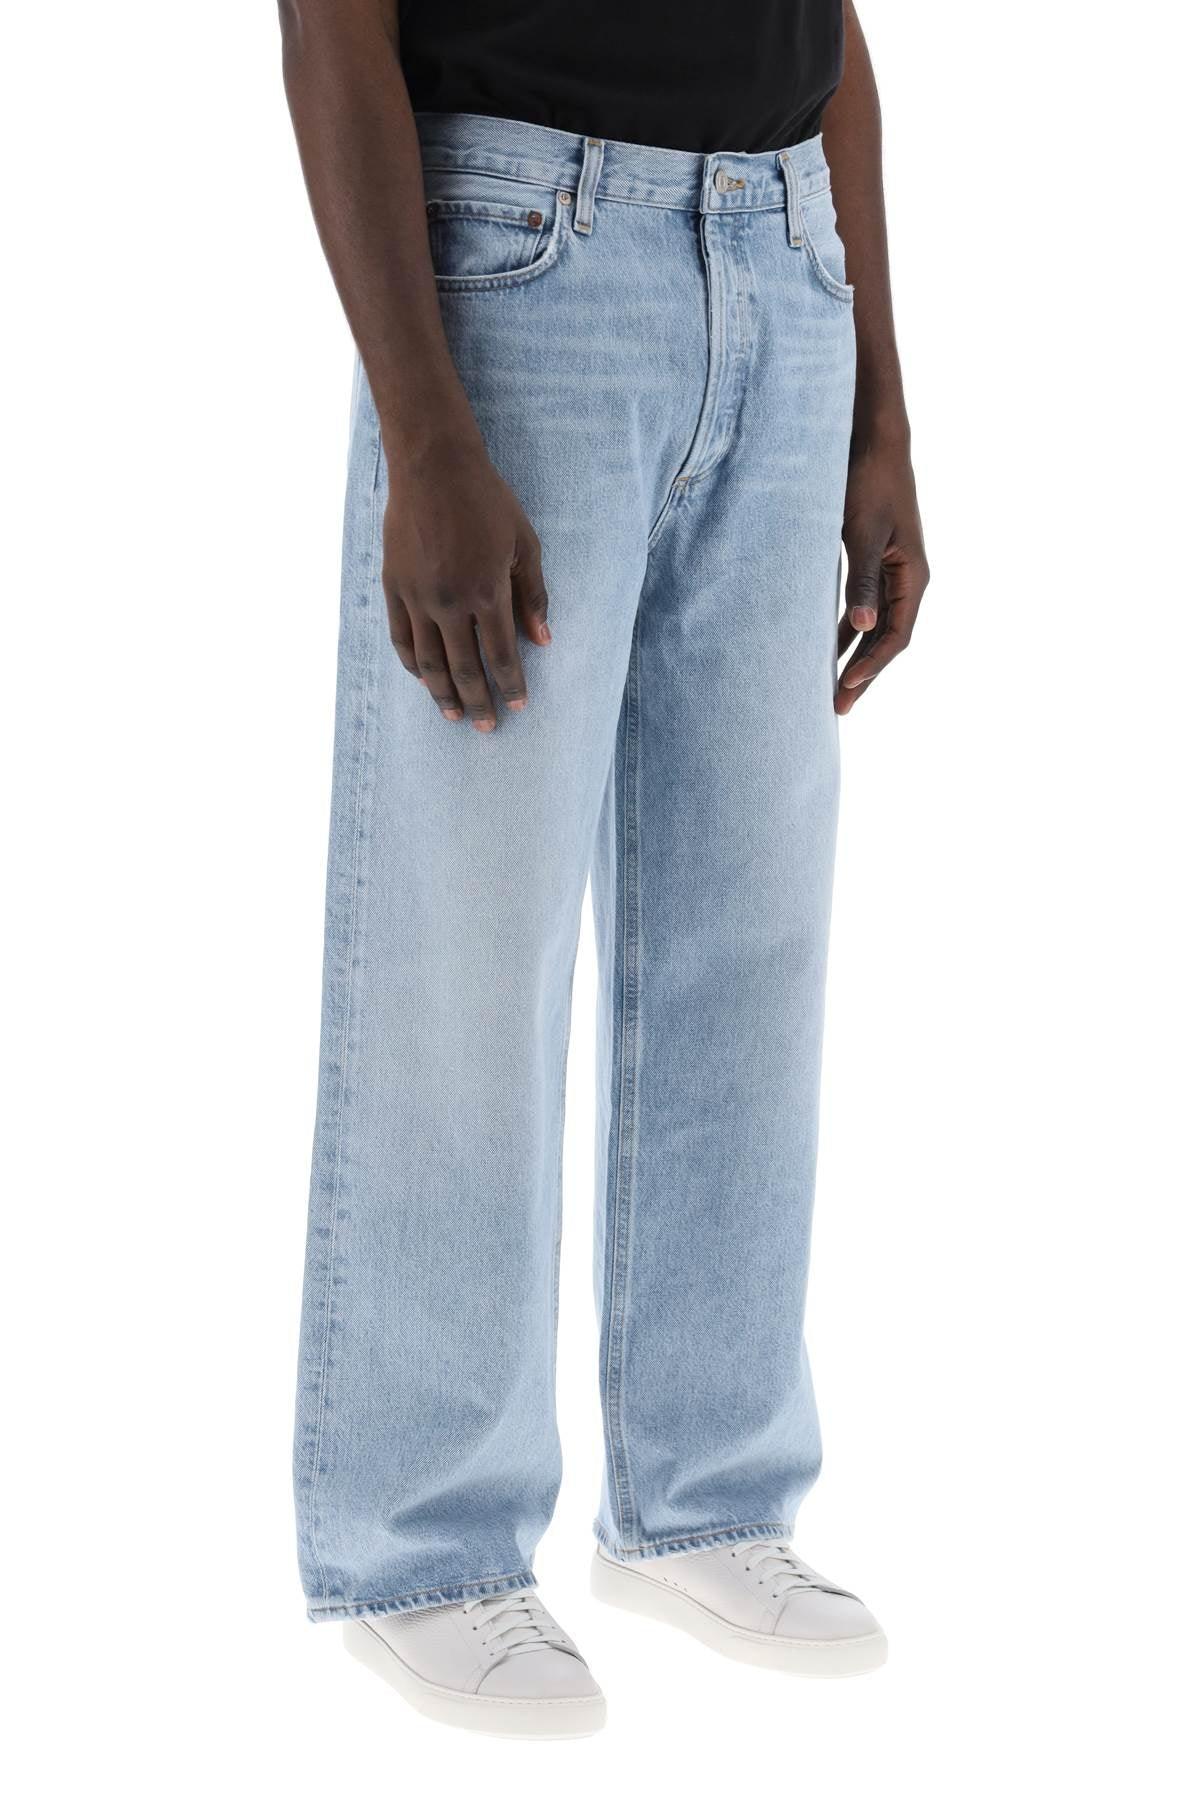 Agolde Regenerated Cotton-Blend Low Slung Baggy Jeans in Harmony - JOHN JULIA